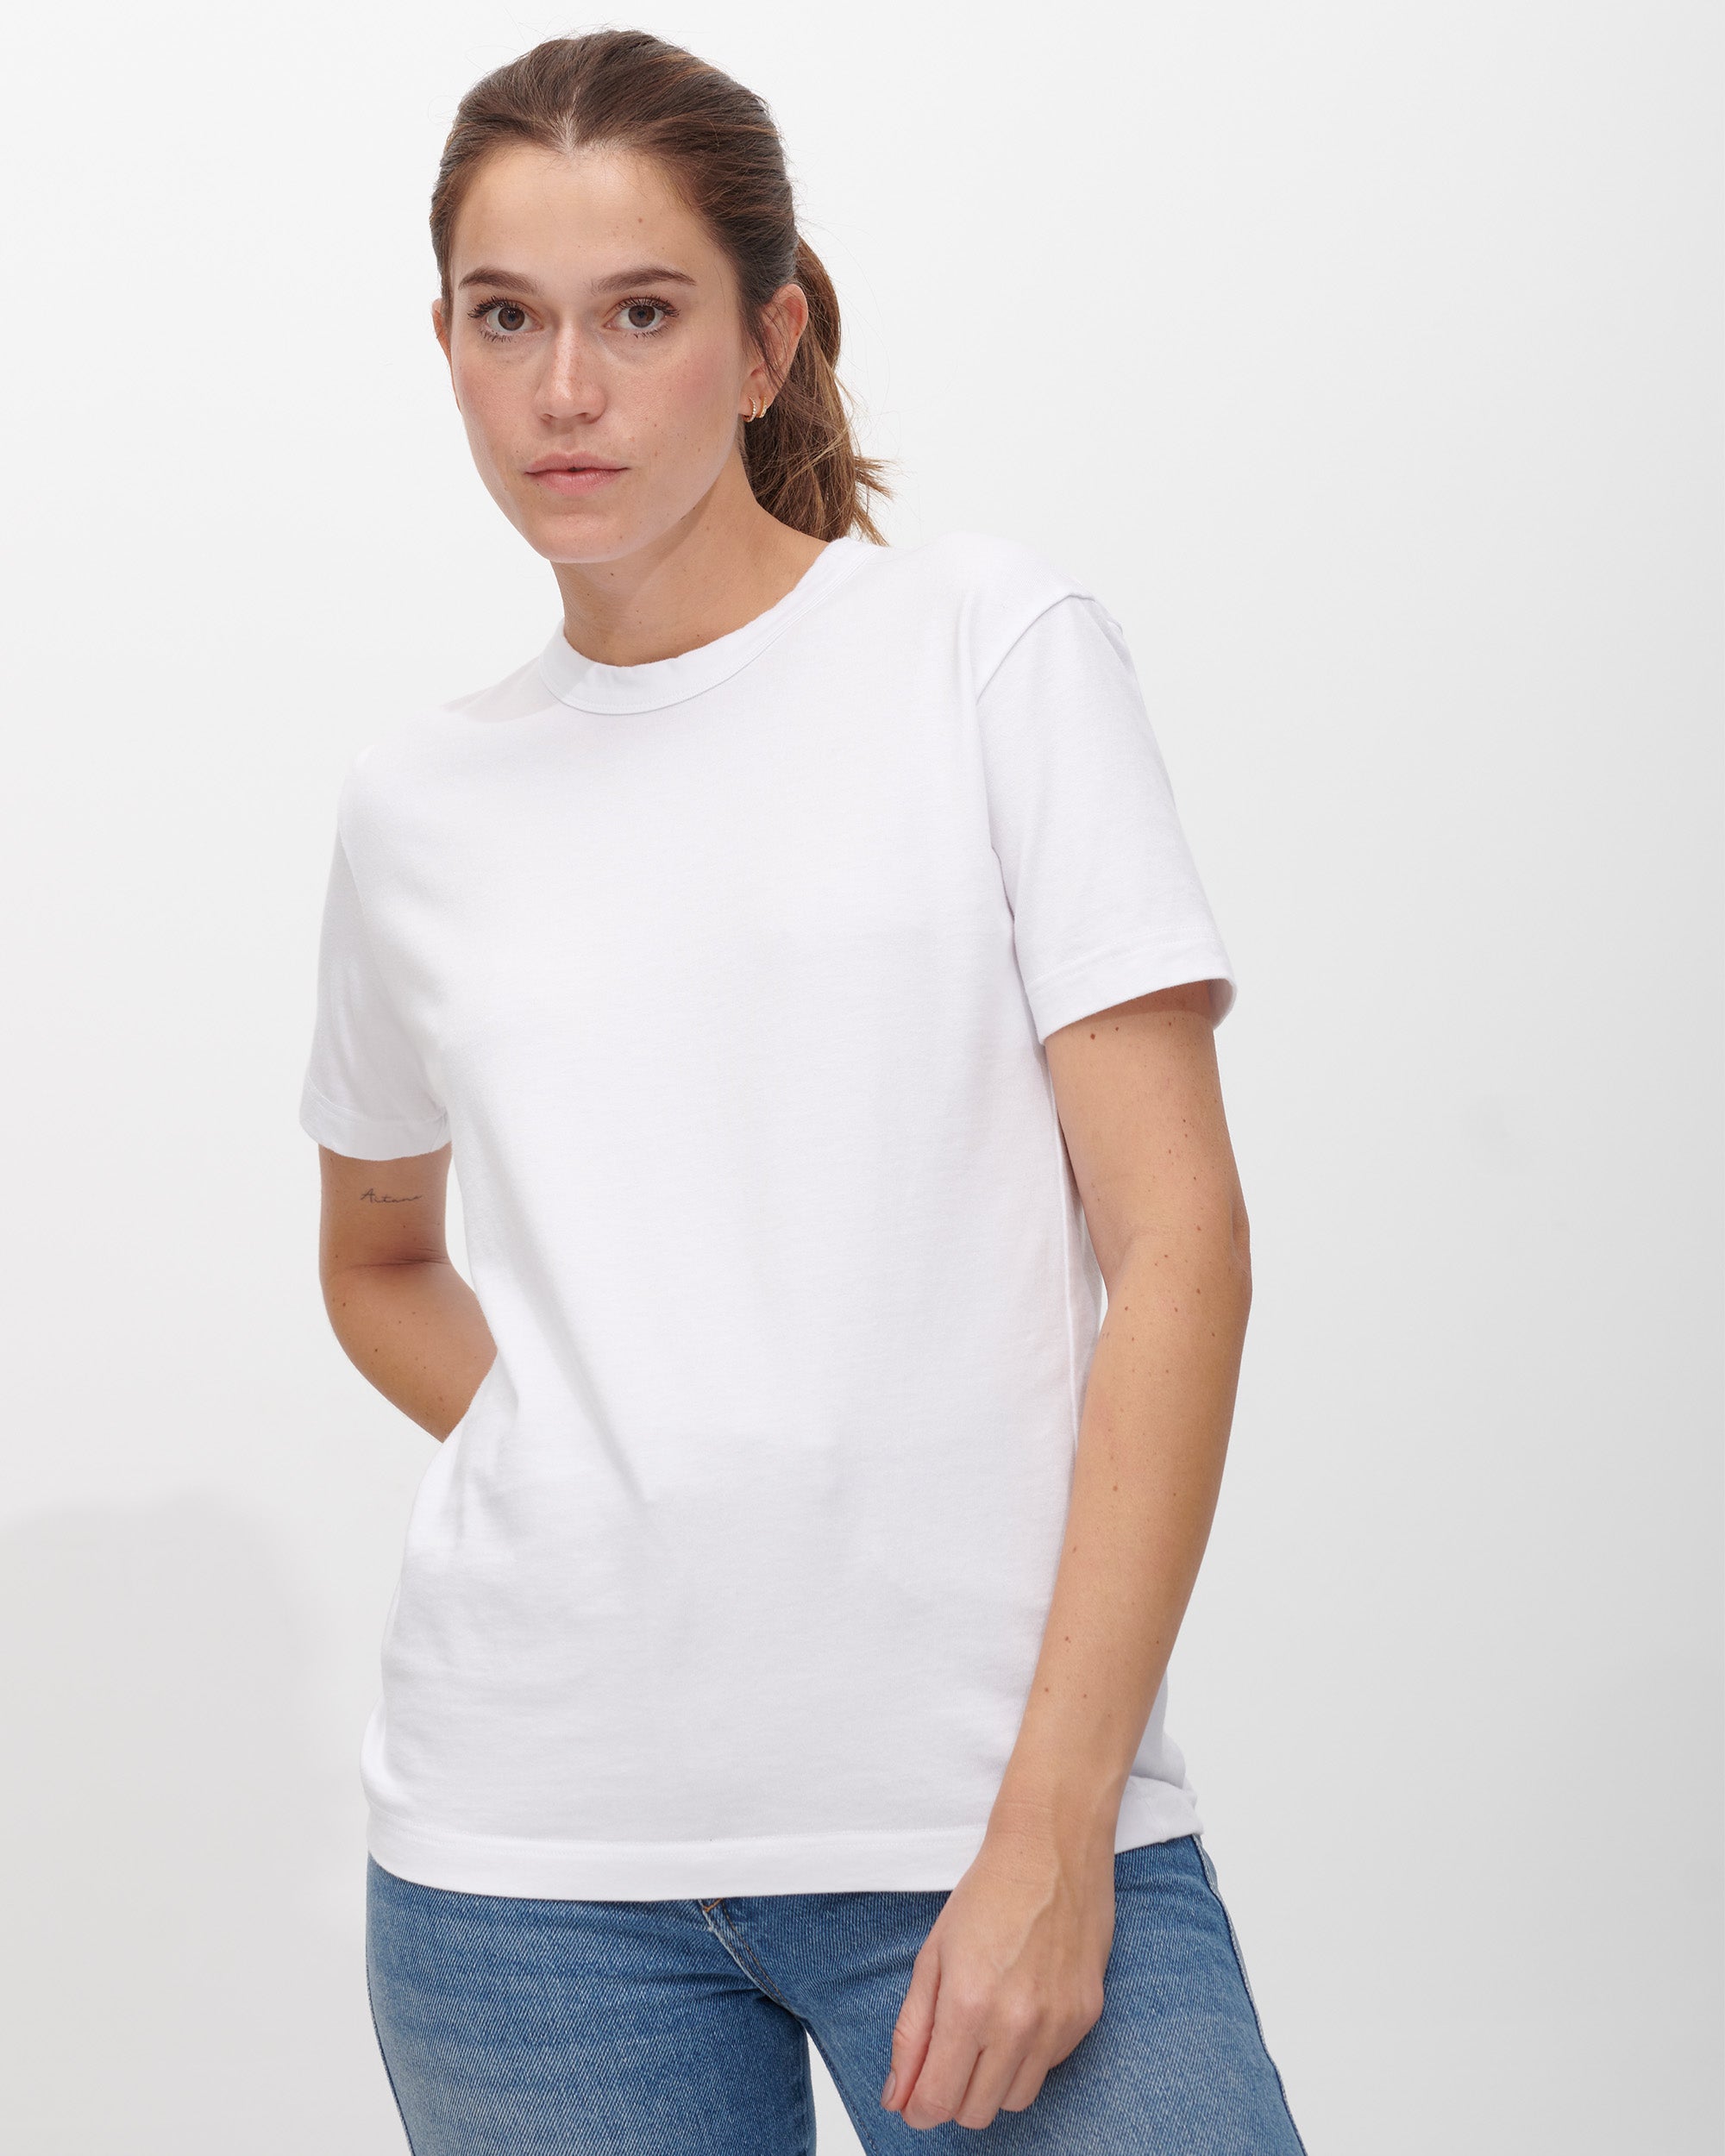 | Heavyweight Organic Winter for Tee Unisex Cotton T-Shirt 100% Women